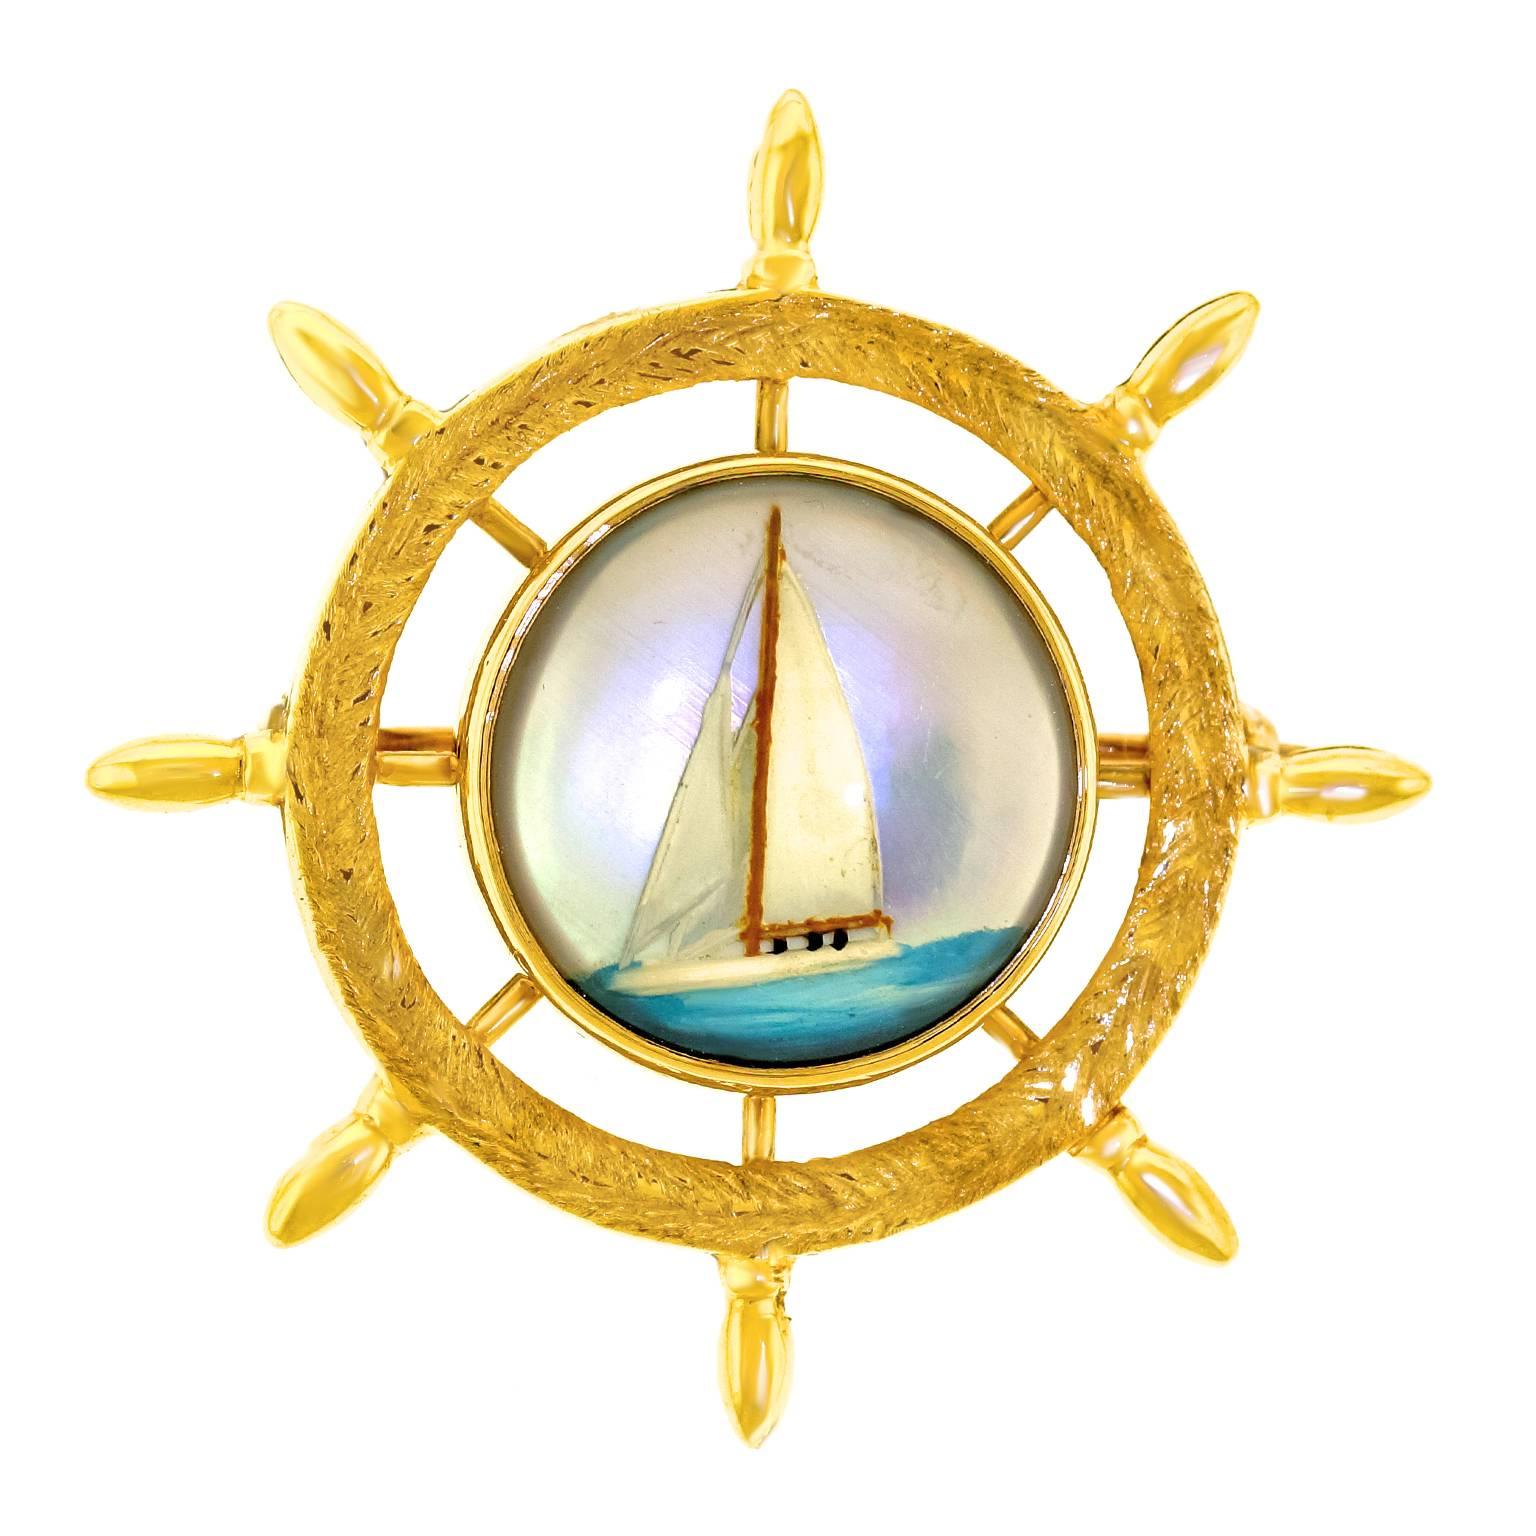 Nautical Theme Essex Crystal Gold Brooch